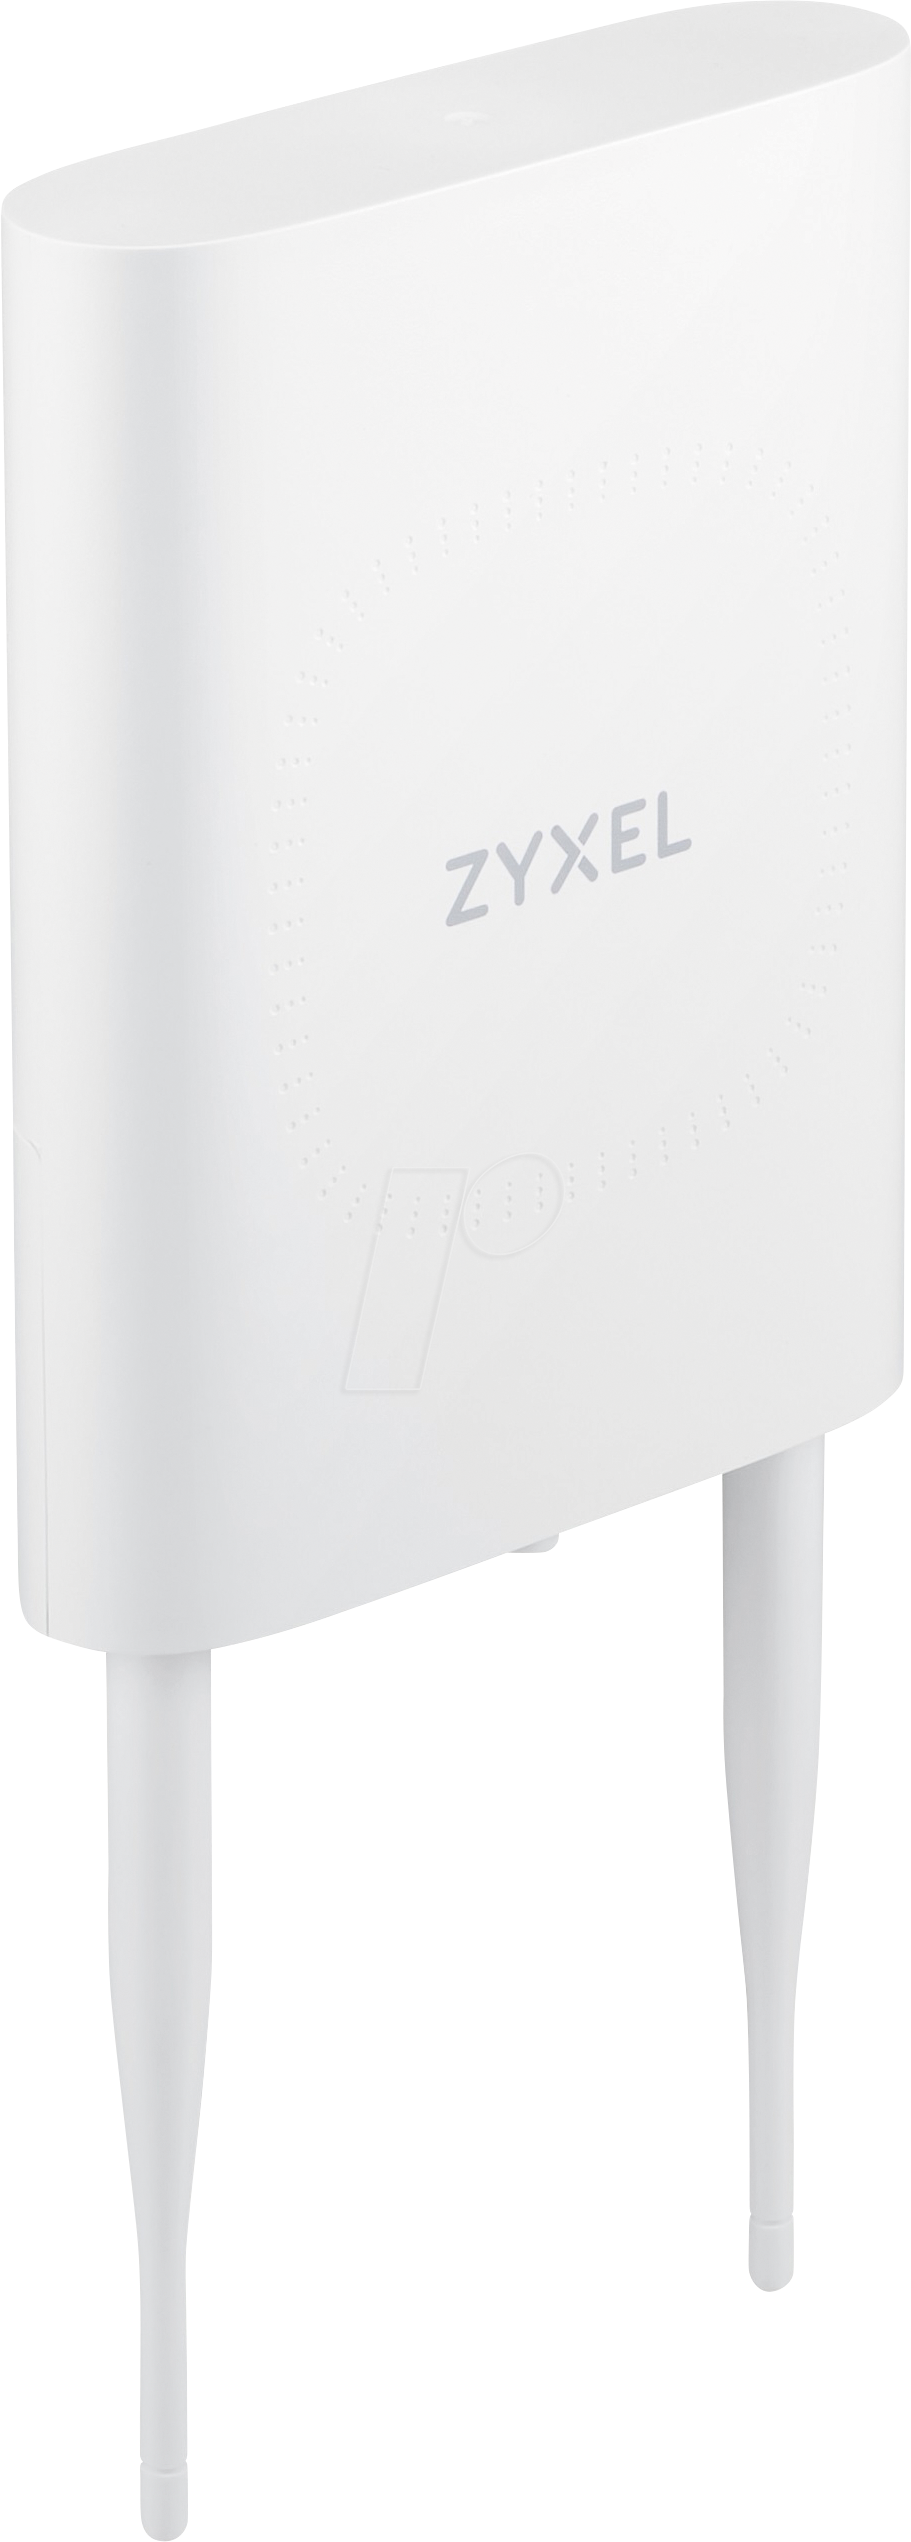 ZYXEL NWA55AXE - WLAN Access Point 2.4/5 GHz 1775 MBit/s von Zyxel